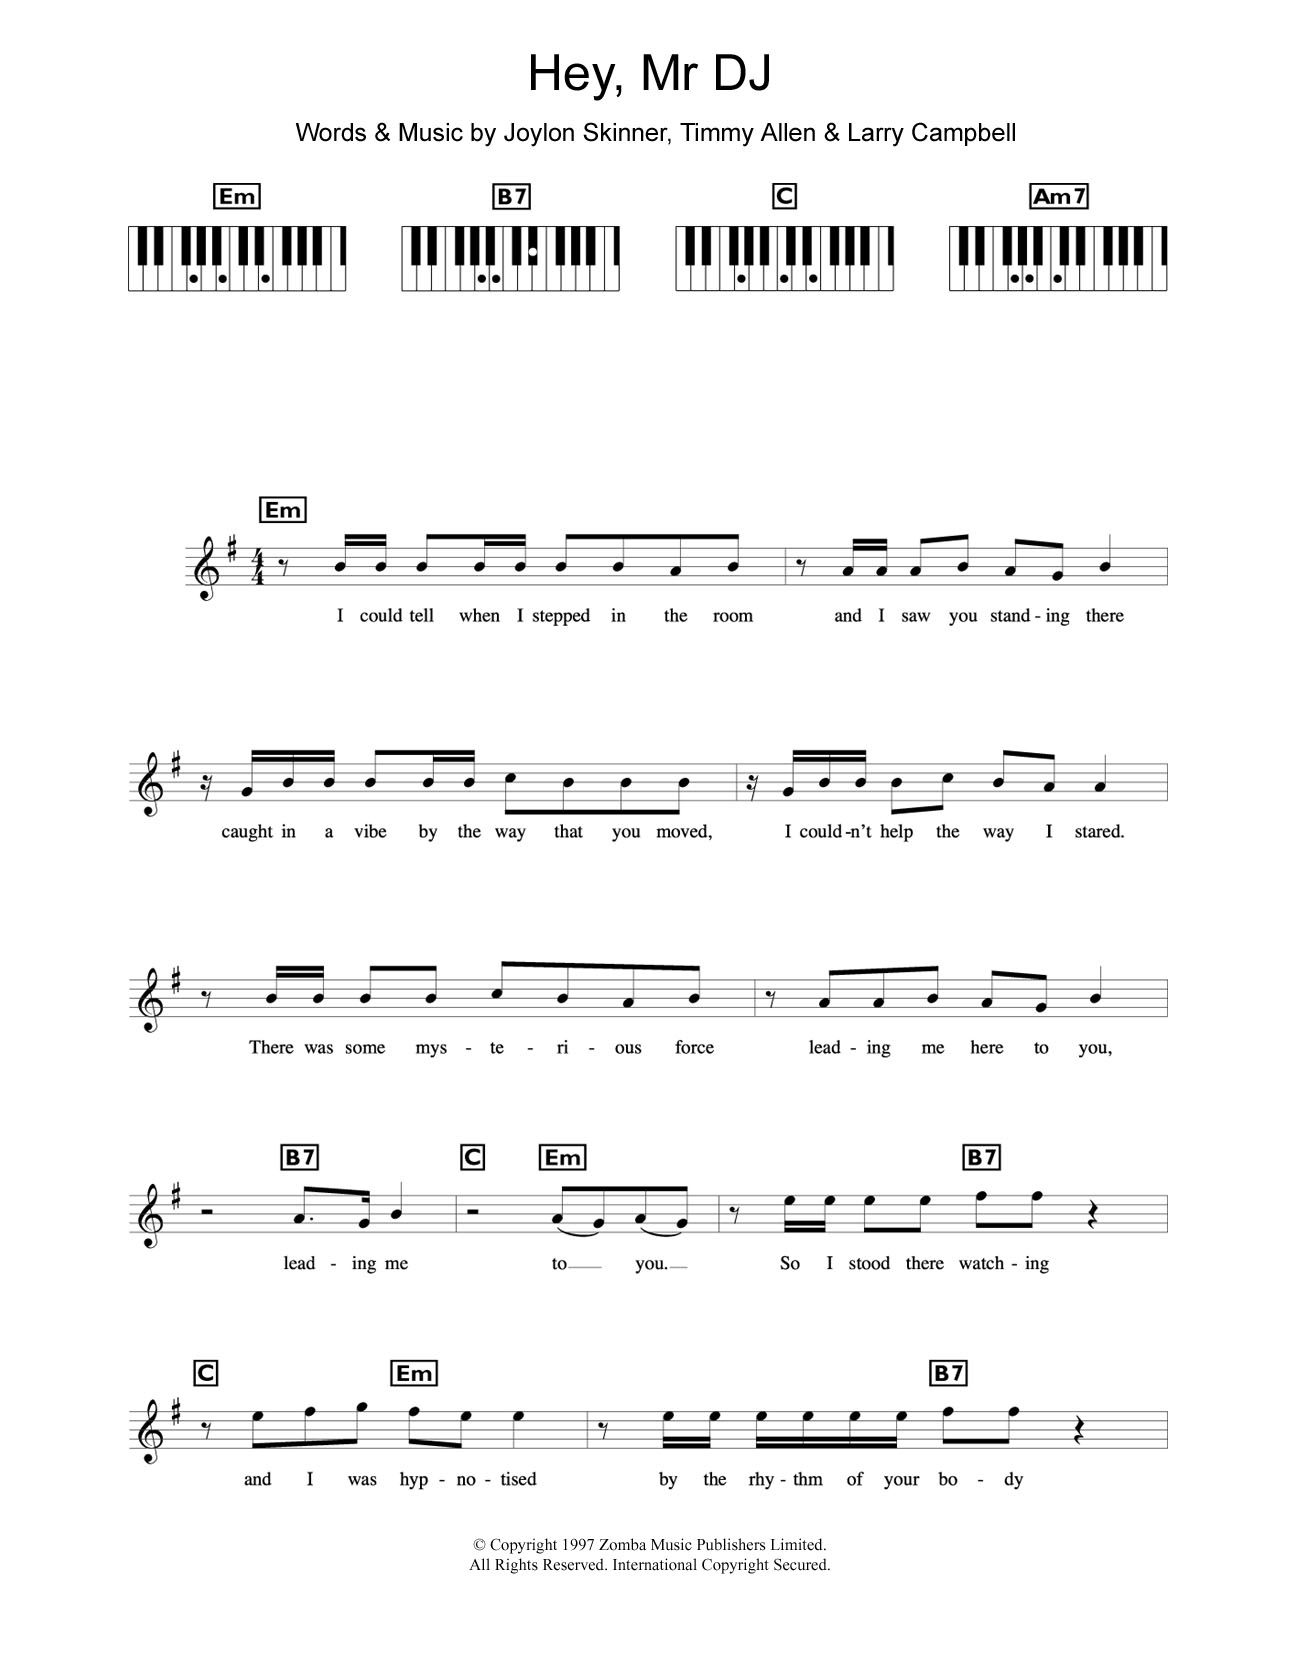 Backstreet Boys Hey, Mr DJ Sheet Music Notes & Chords for Keyboard - Download or Print PDF